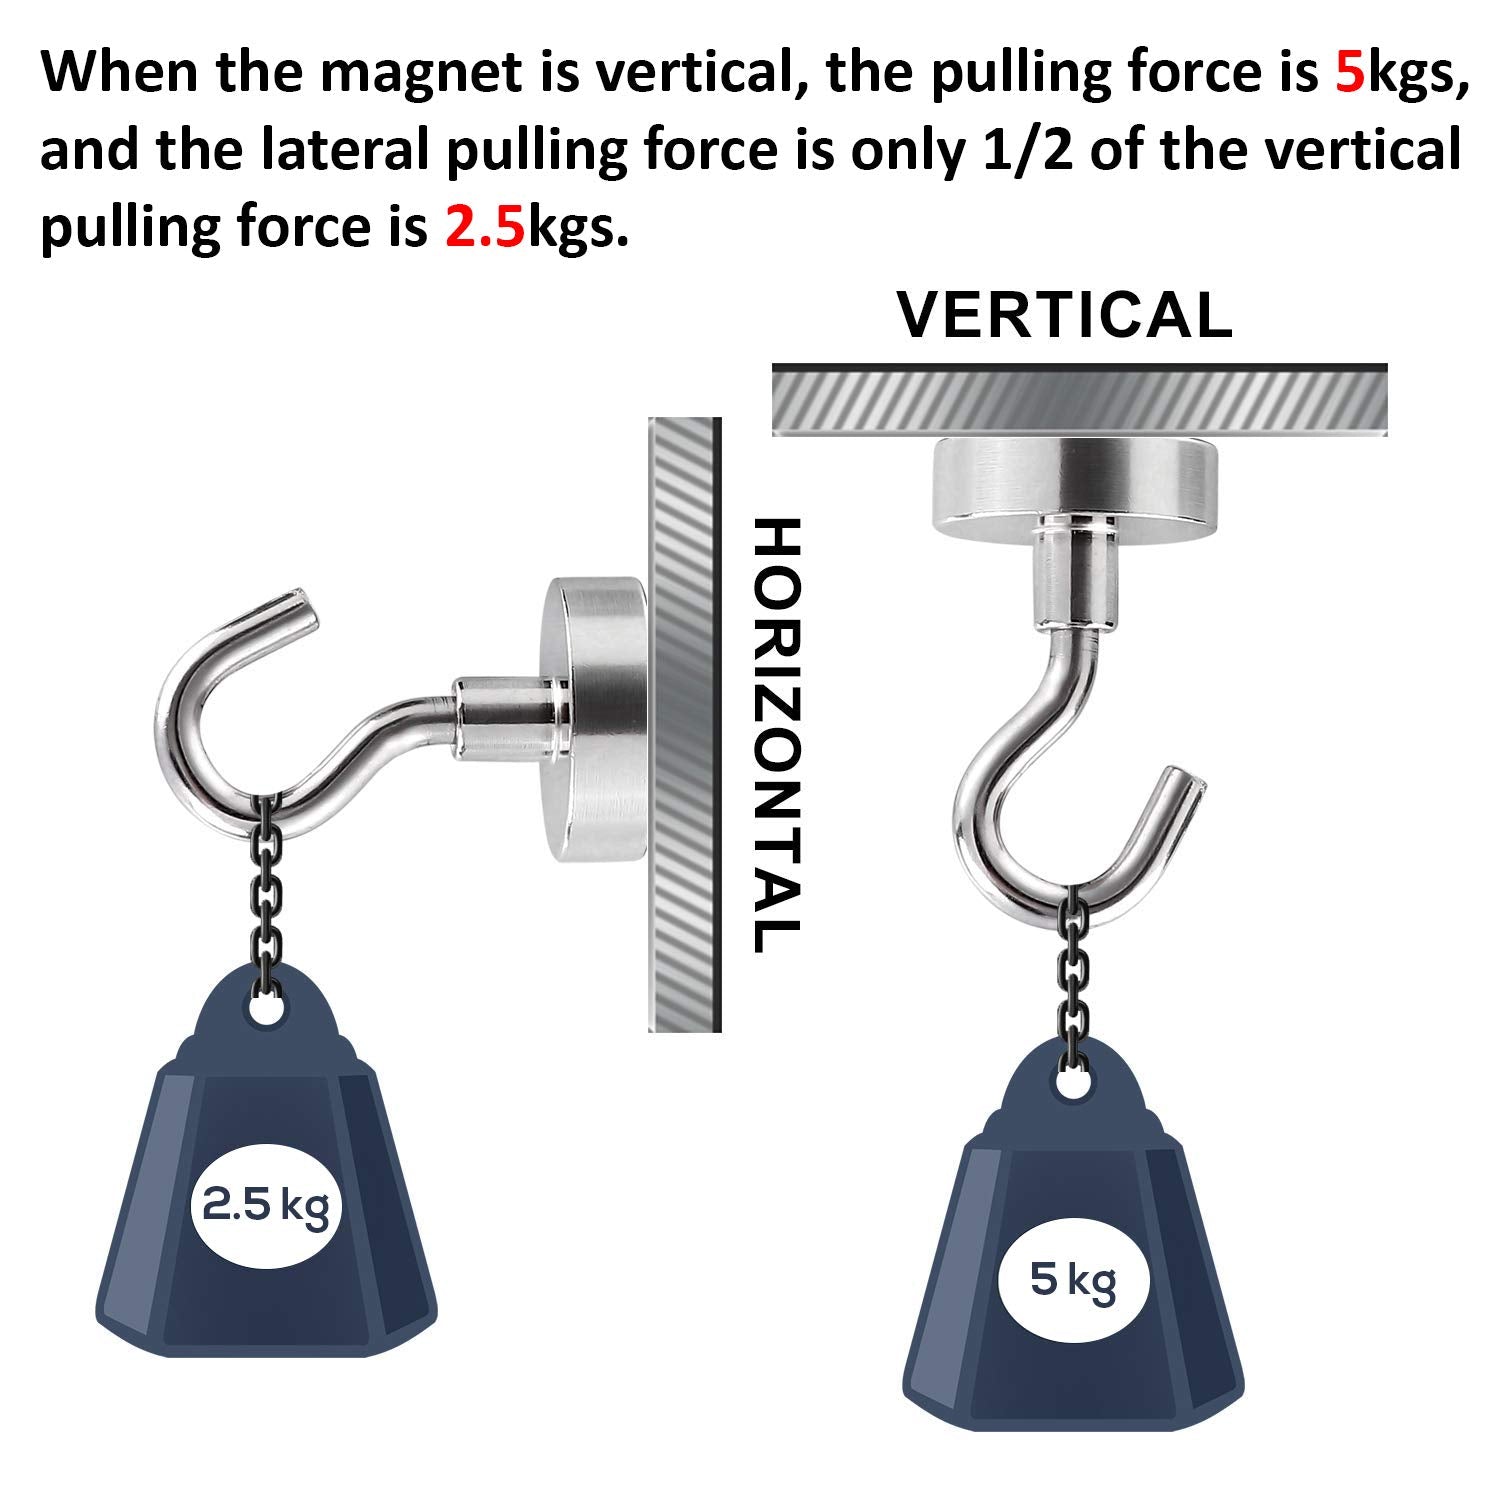 Magnetic Hooks for Multi-Function on Metal Surface LifeKrafts